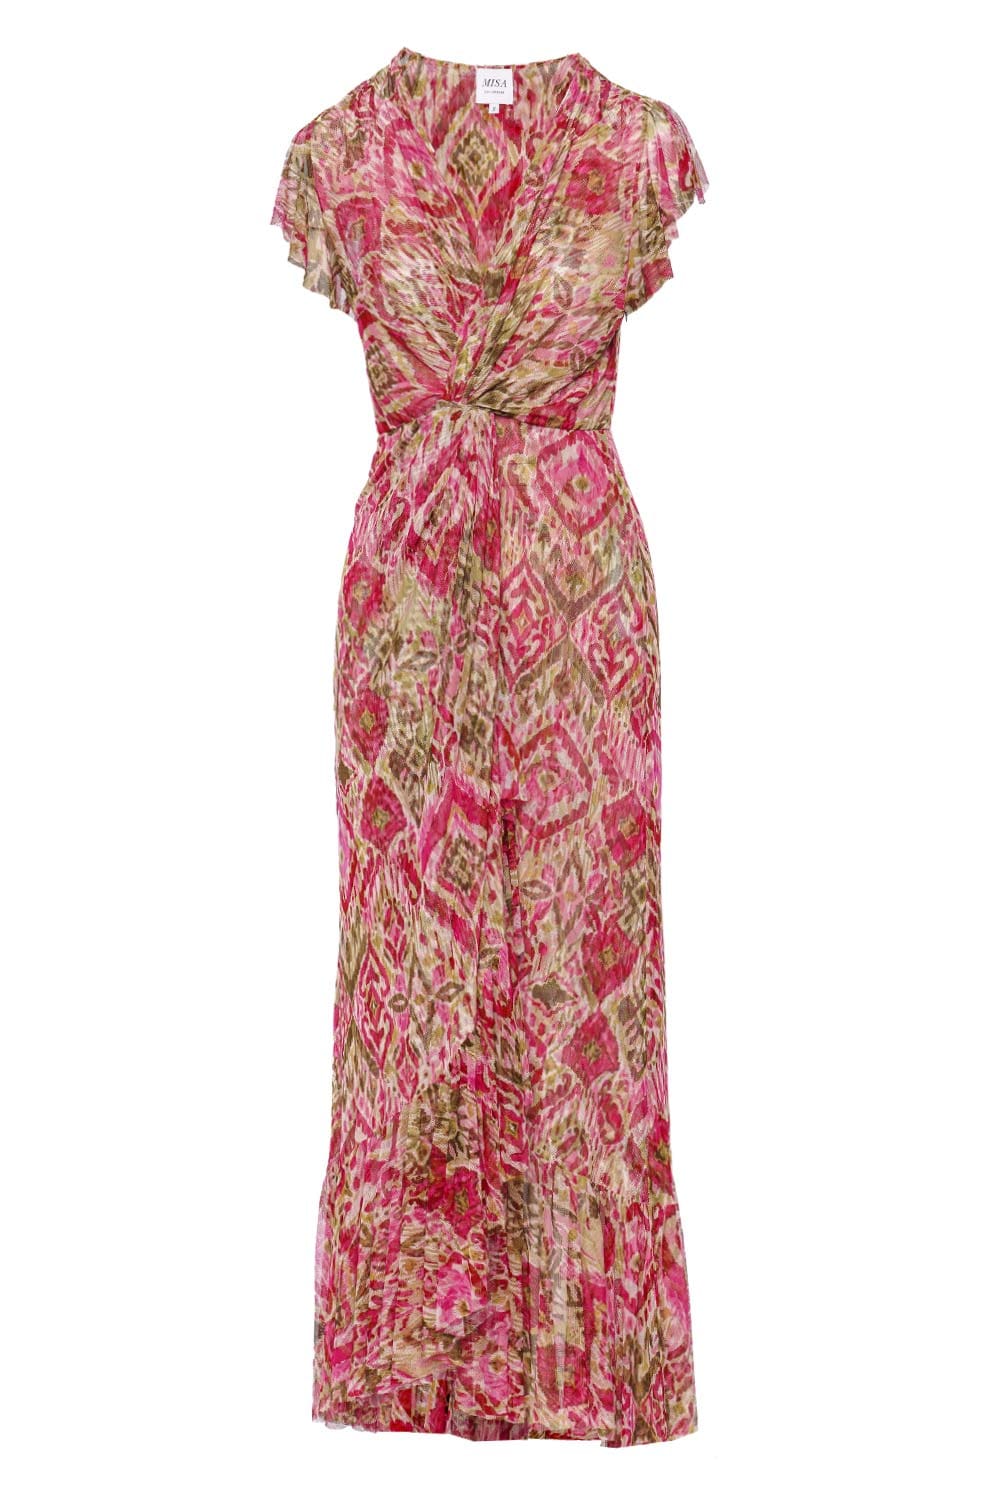 MISA LOS ANGELES Avaline Summer Ikat Floral Maxi Dress